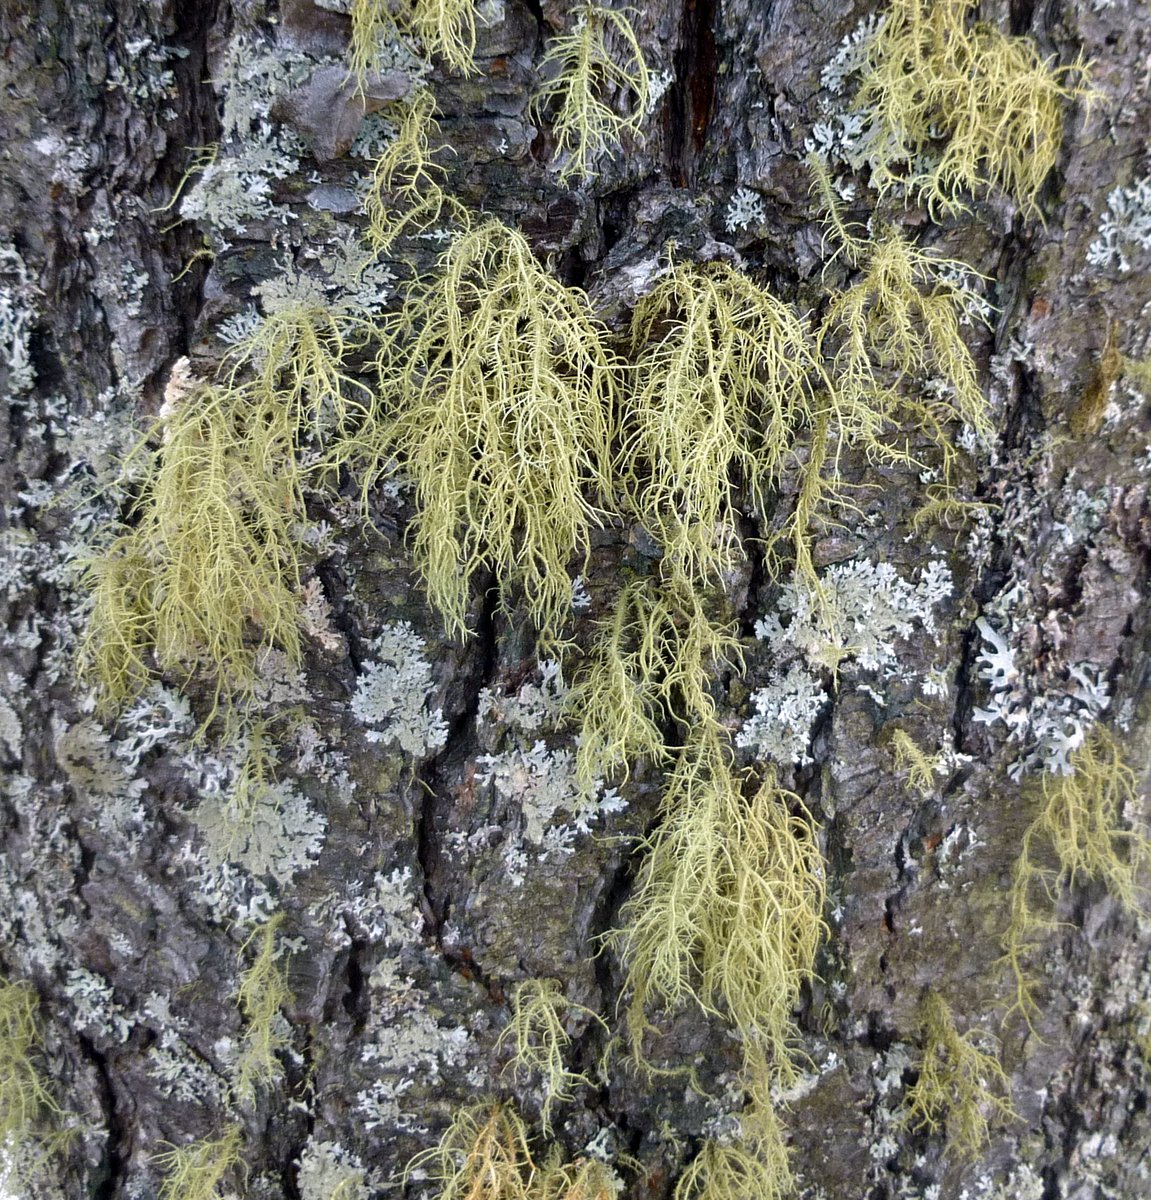 8. Beard Lichens